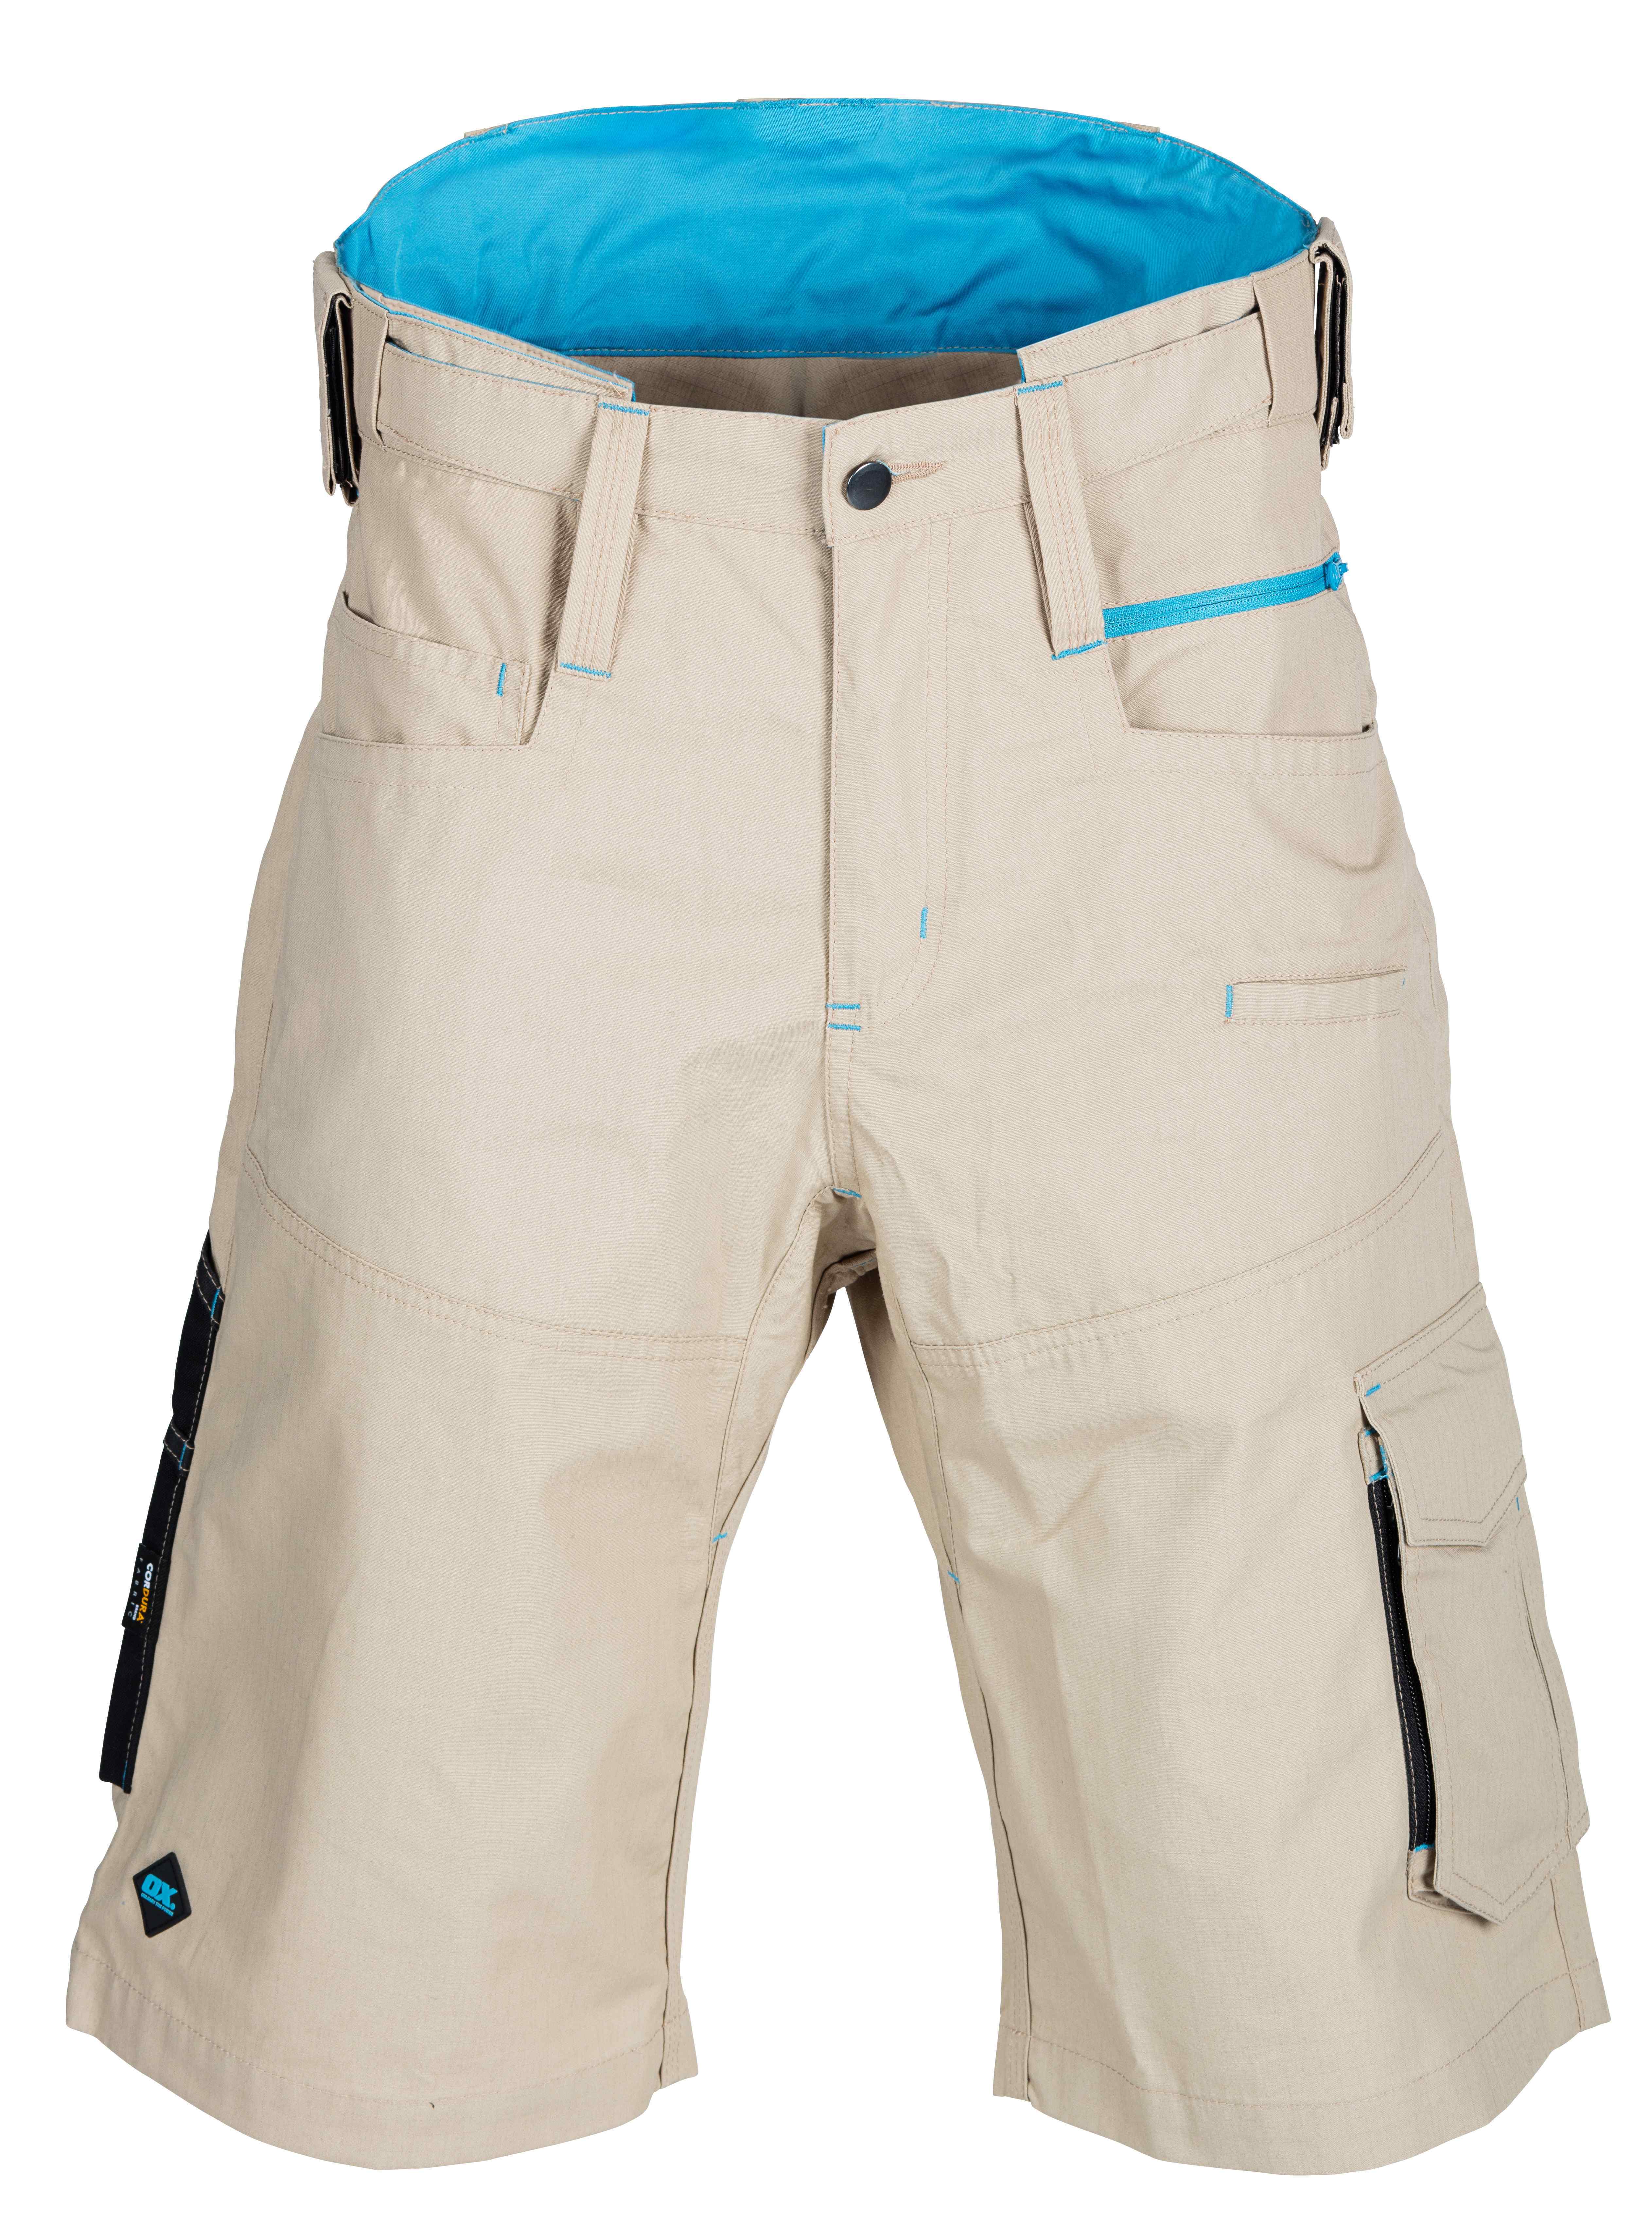 OX Ripstop Shorts - Beige - 34 - Reg